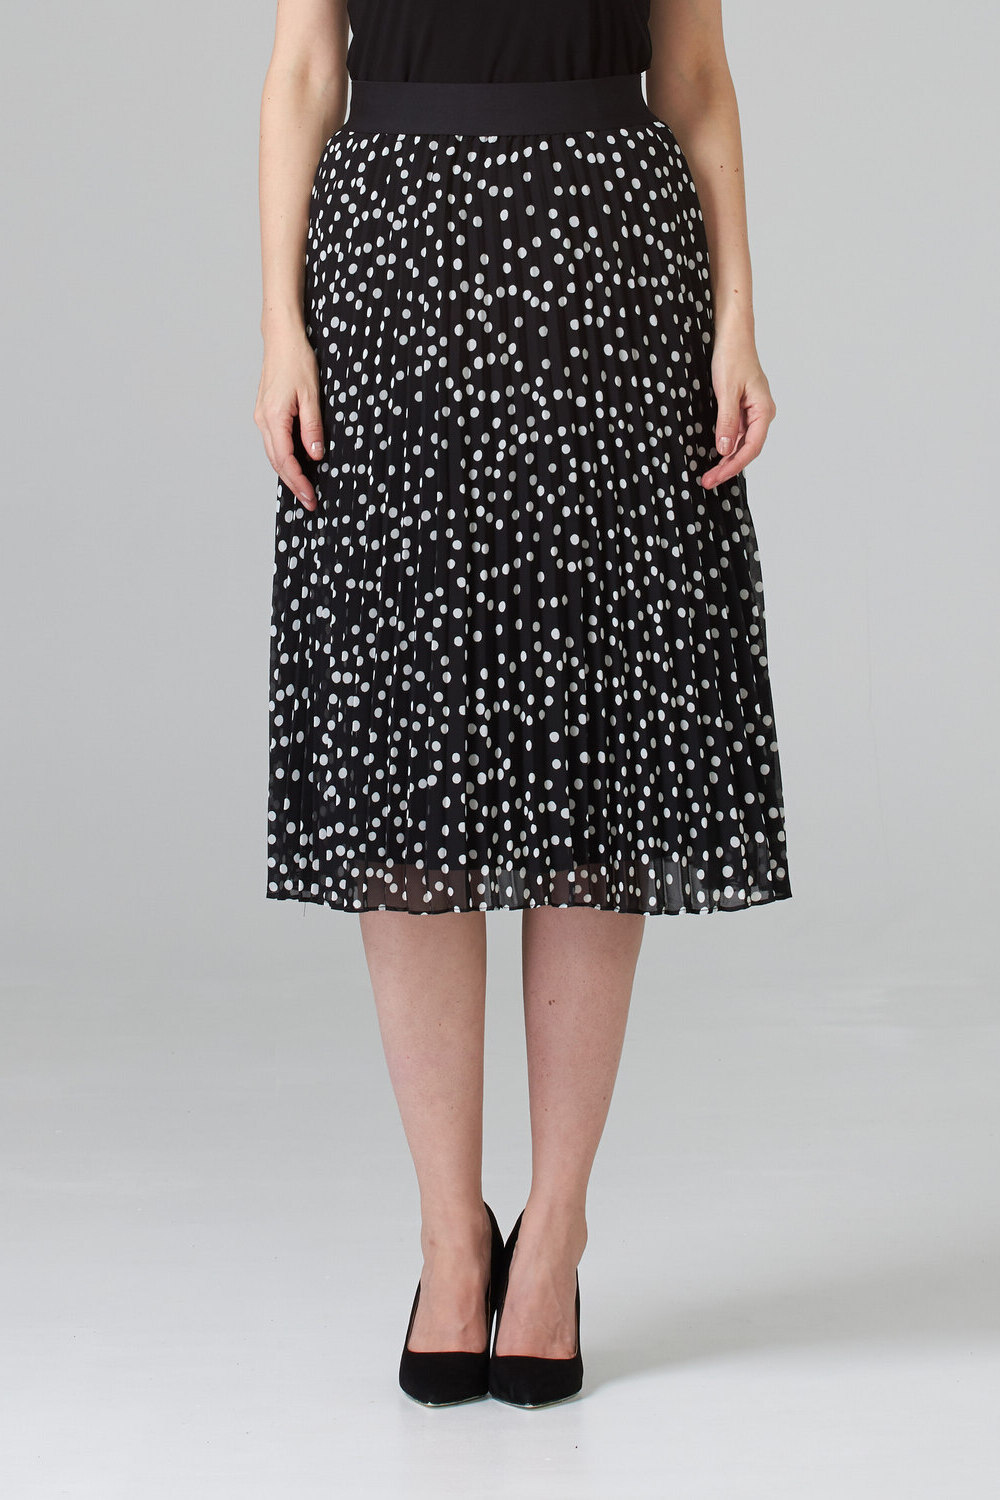 Joseph Ribkoff Skirt Style 201255. Black/vanilla